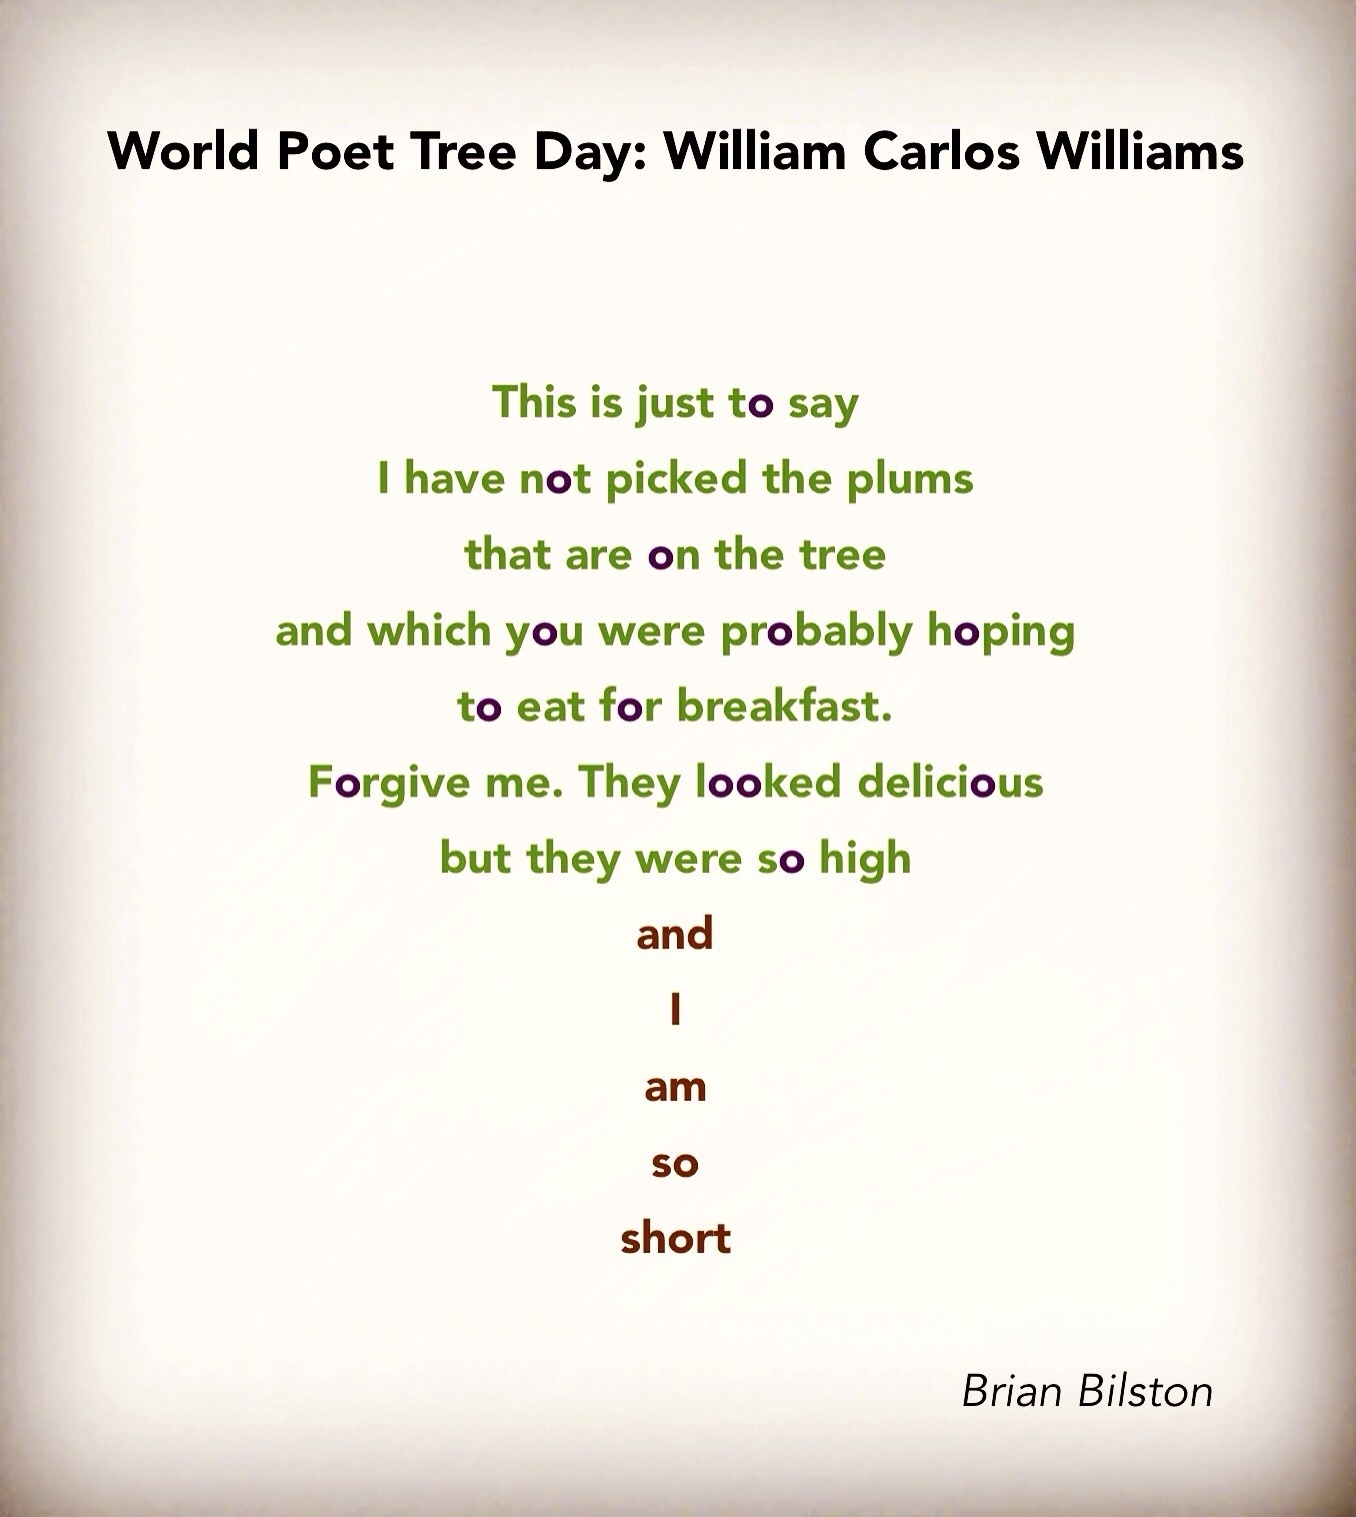 World Poet Tree Day: William Carlos Williams | Brian Bilston&#039;s  Short Poem O Calender Images